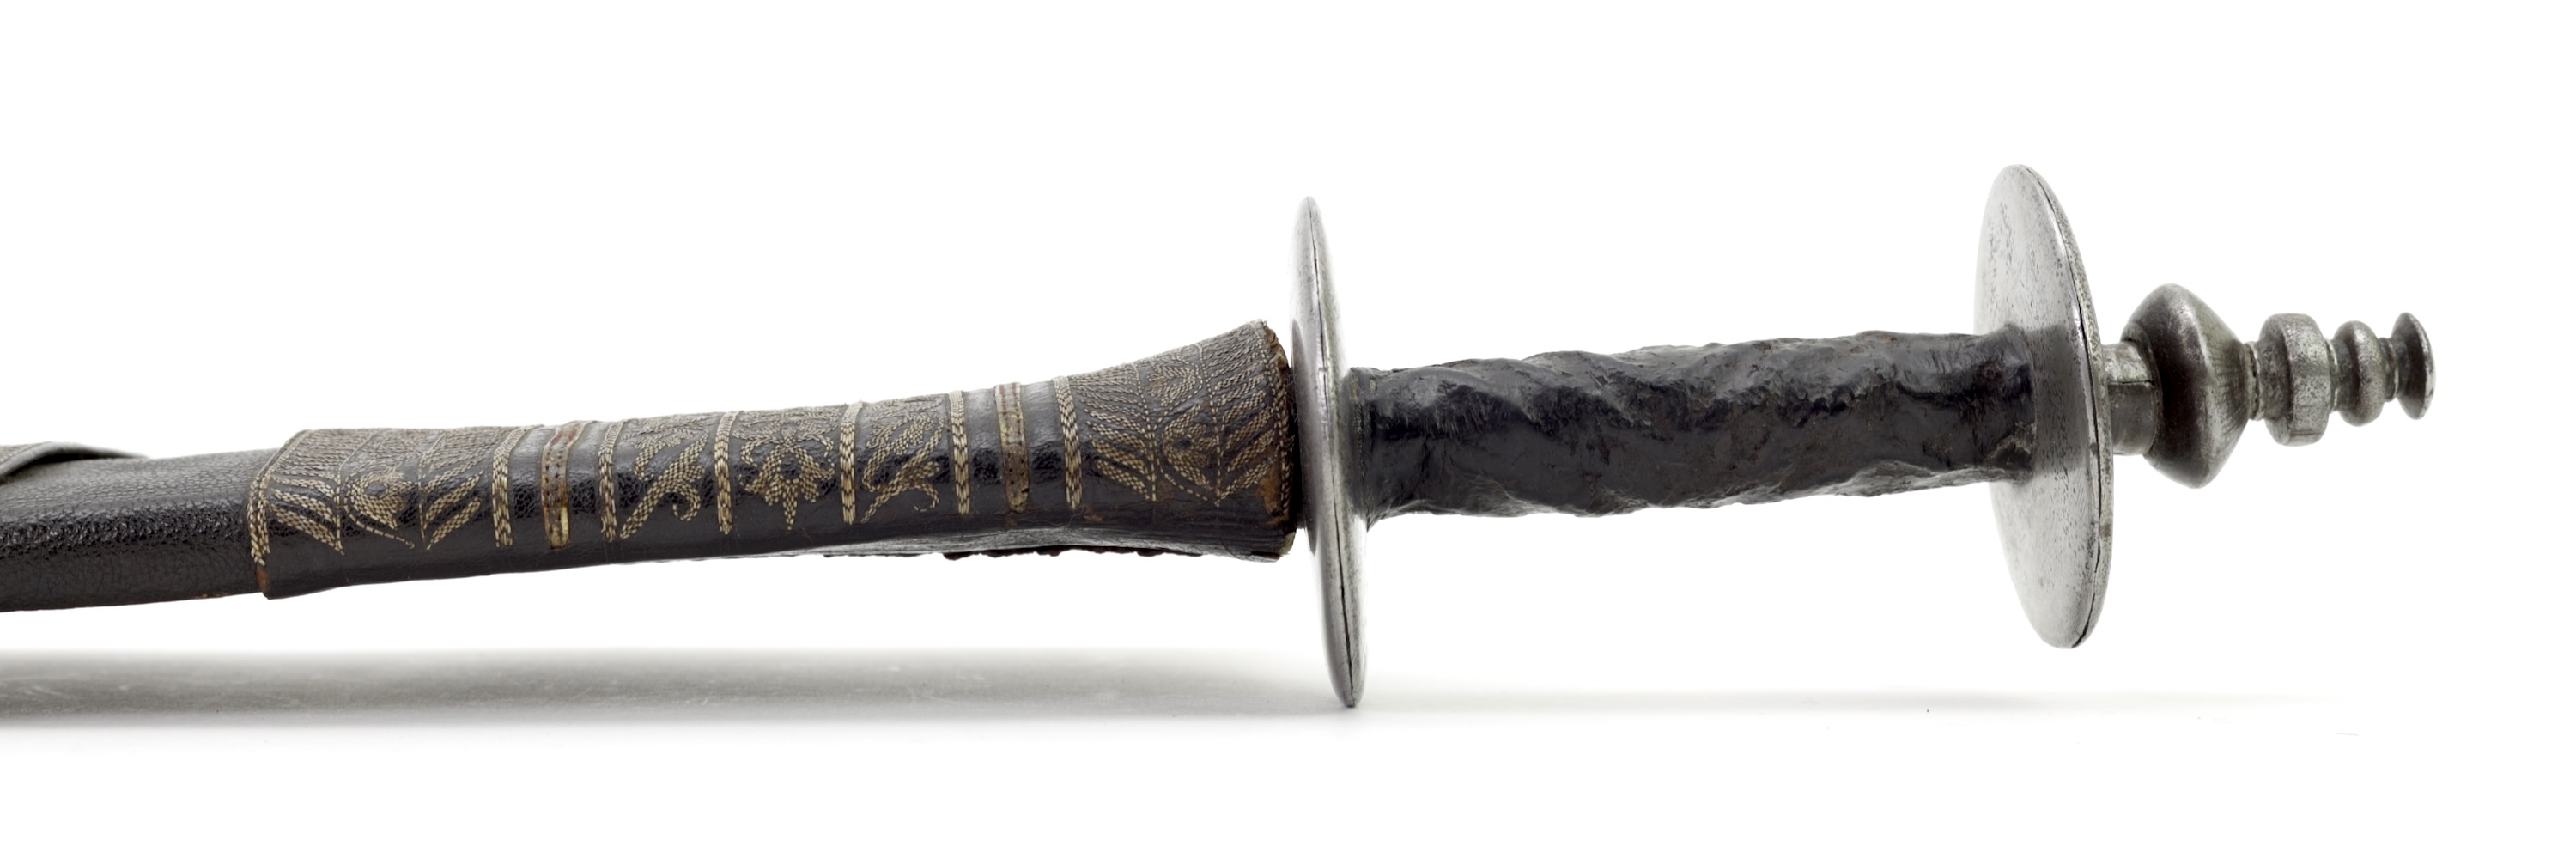 Rare early kora sword